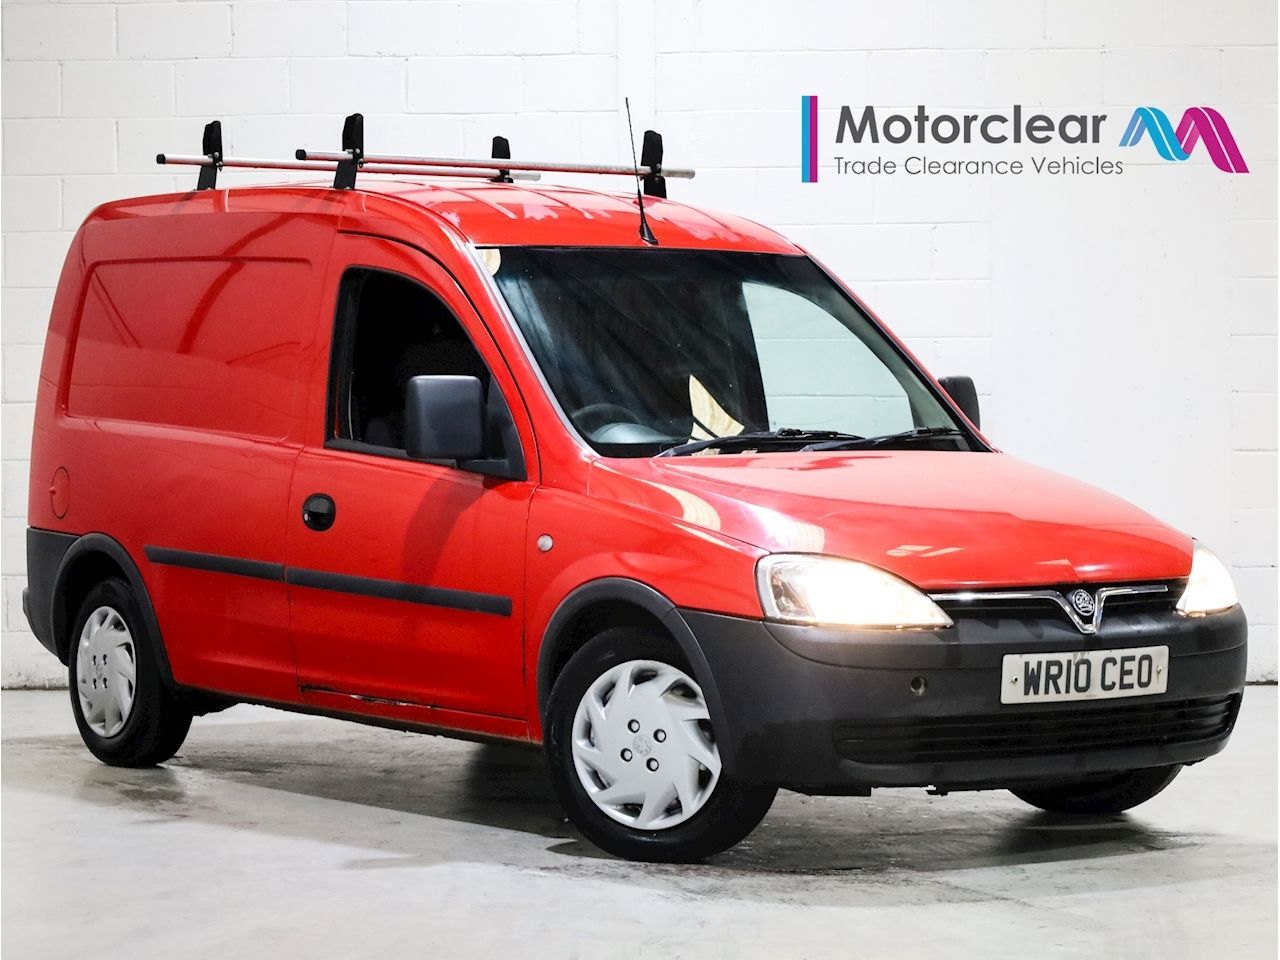 Used Vans for sale in Lowestoft | AutoTrader Vans